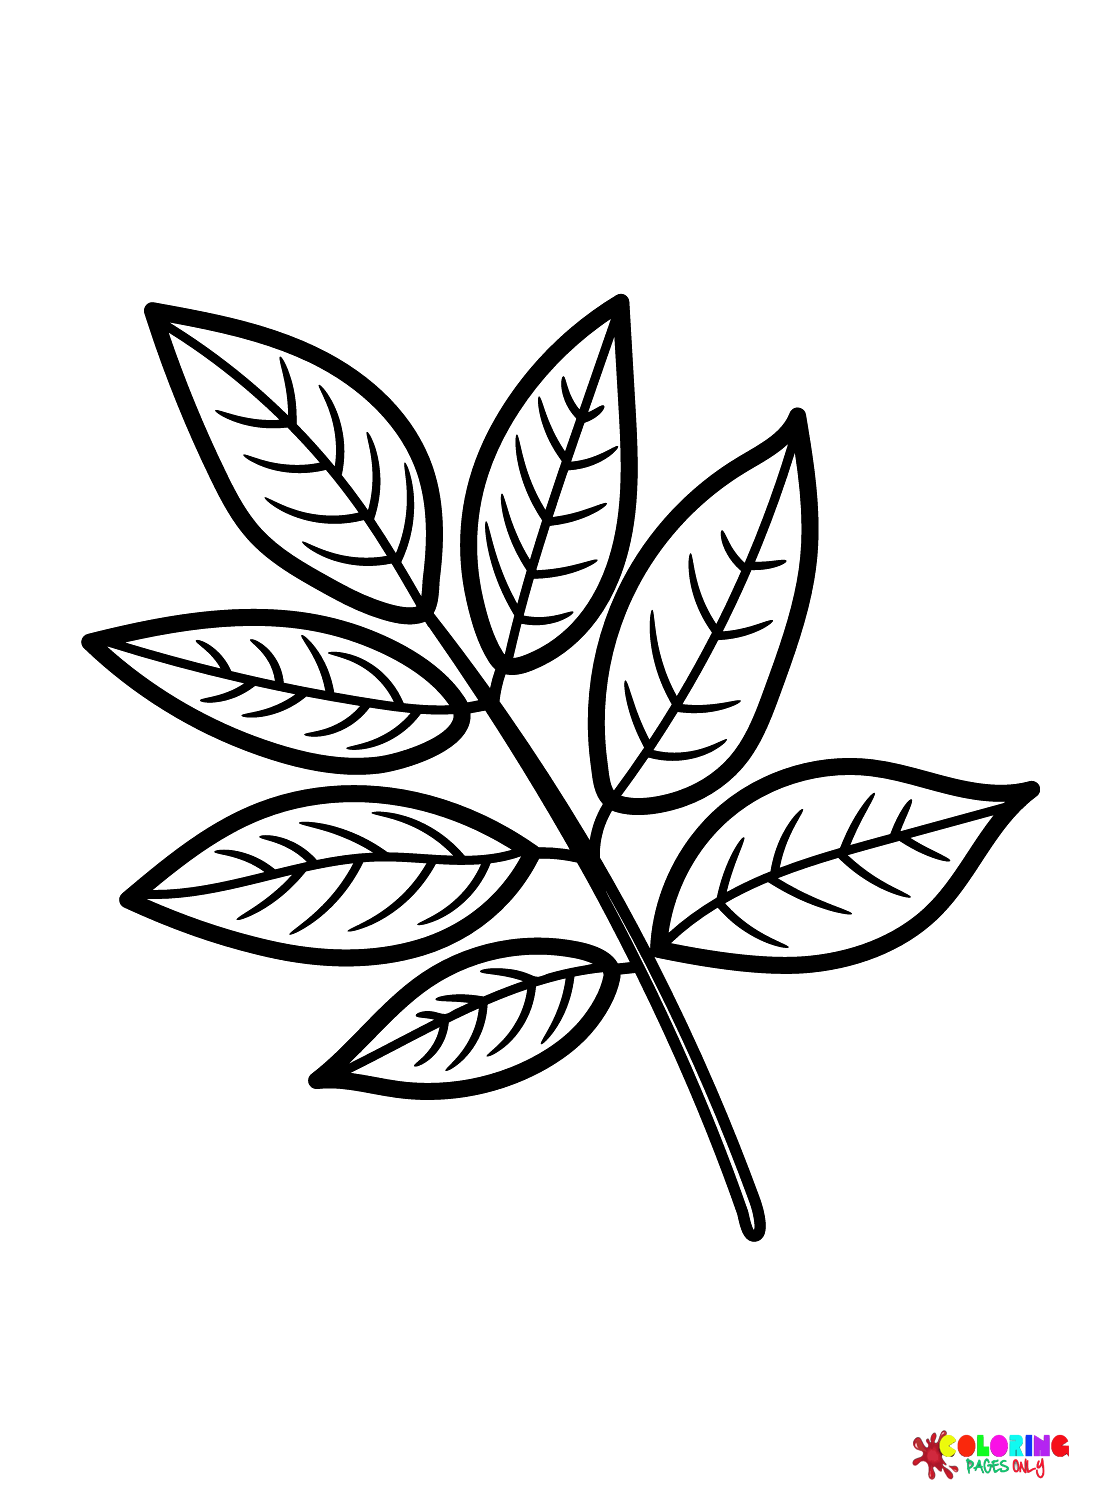 Página para colorir folha de freixo